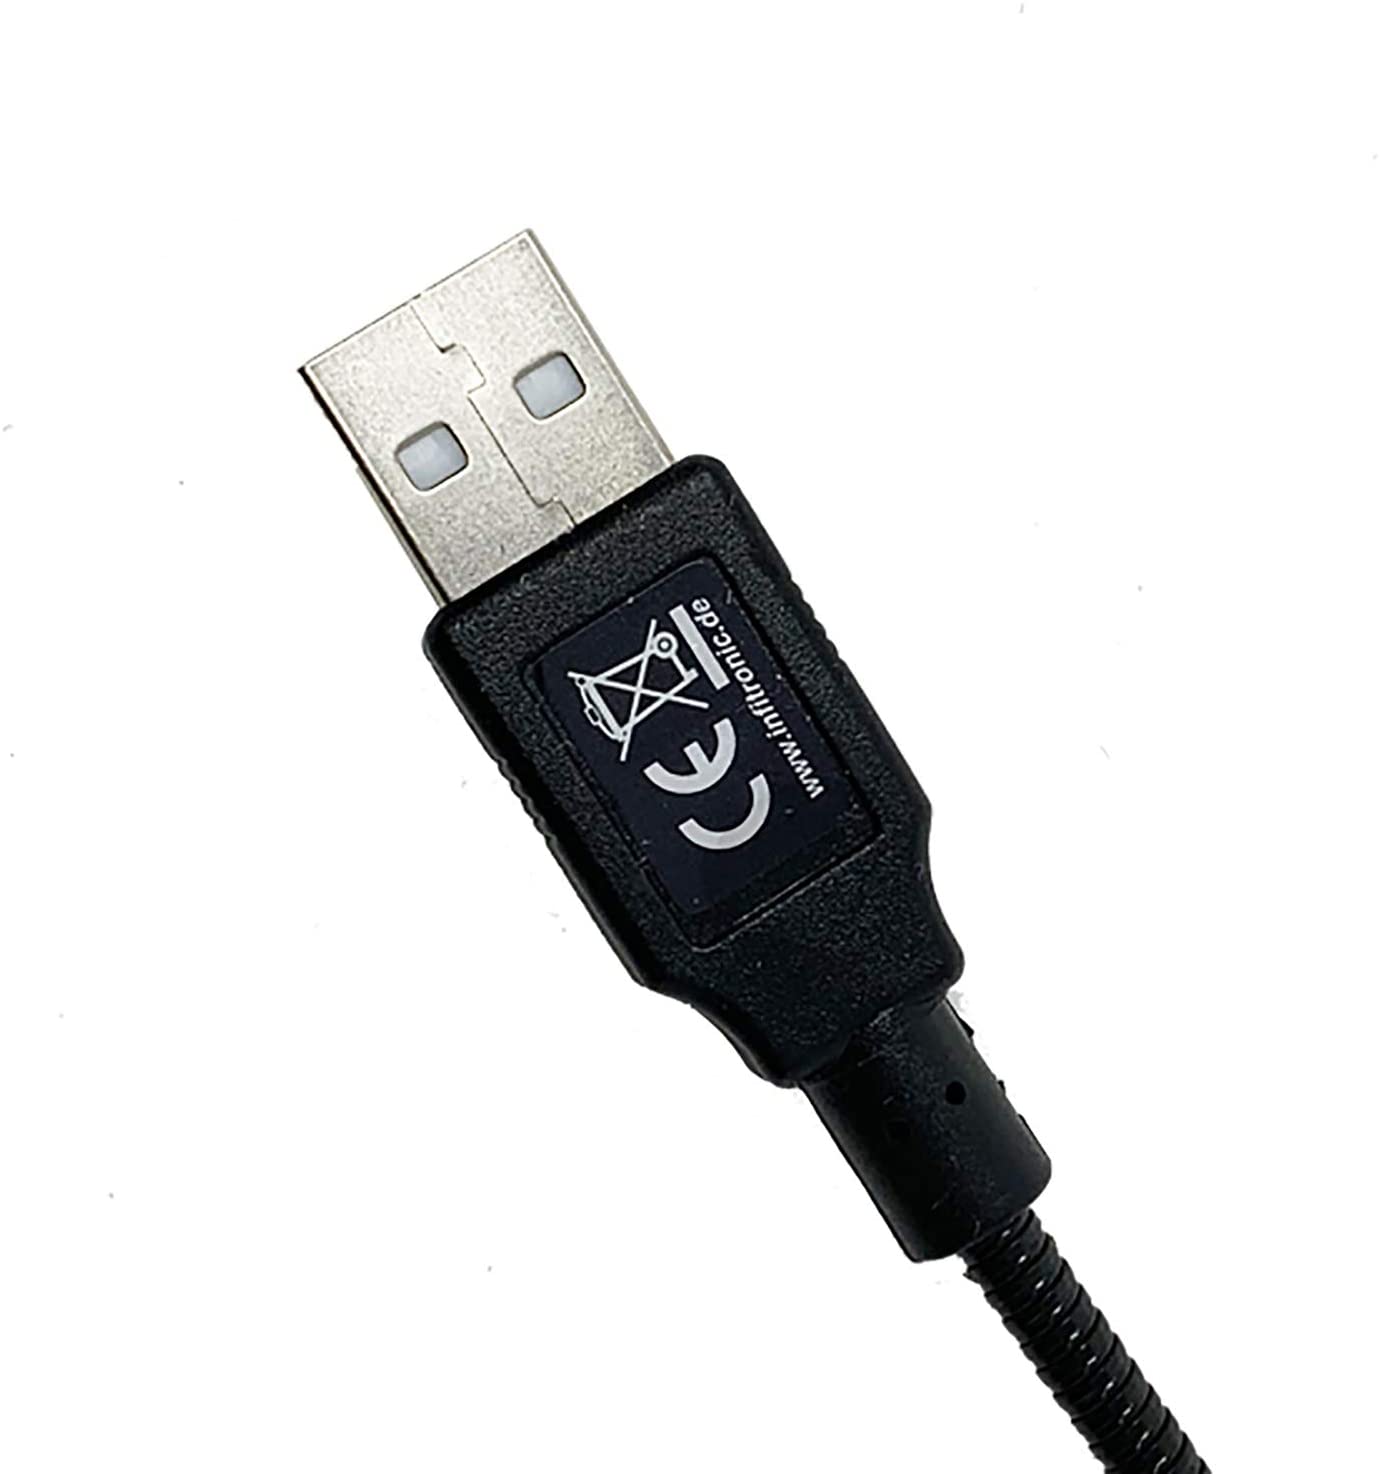 IN3LED1USBM - Multicolor USB Lampe USB Leuchte Schwanenhalsleuchte